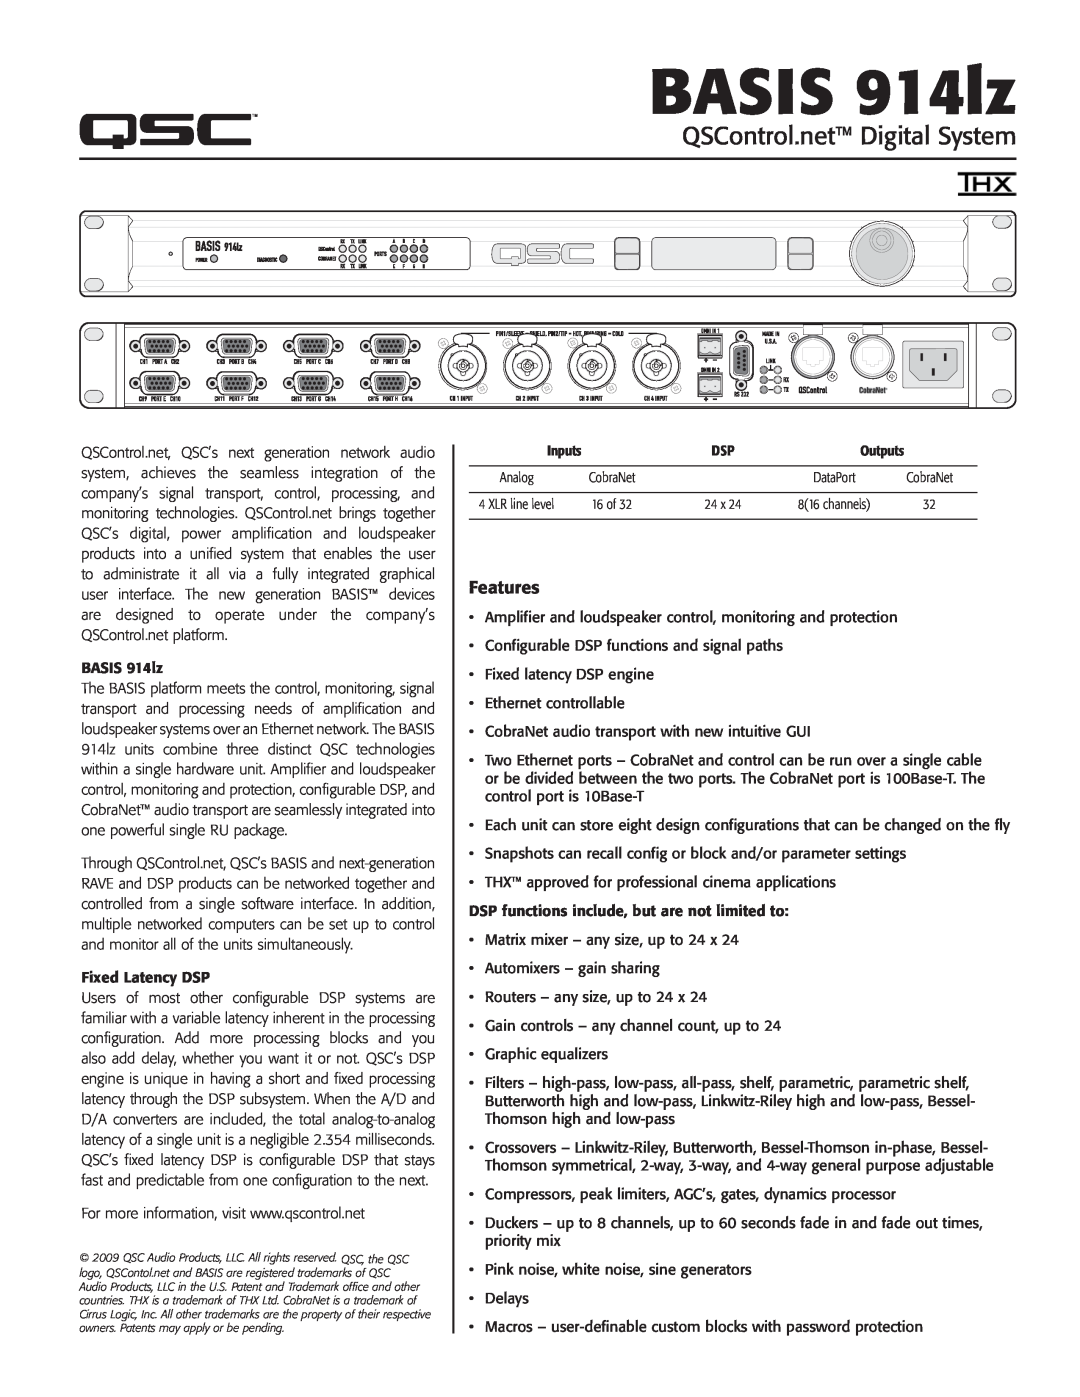 QSC Audio 914LZ manual BASIS 914lz, TD-000200-00rev.A 